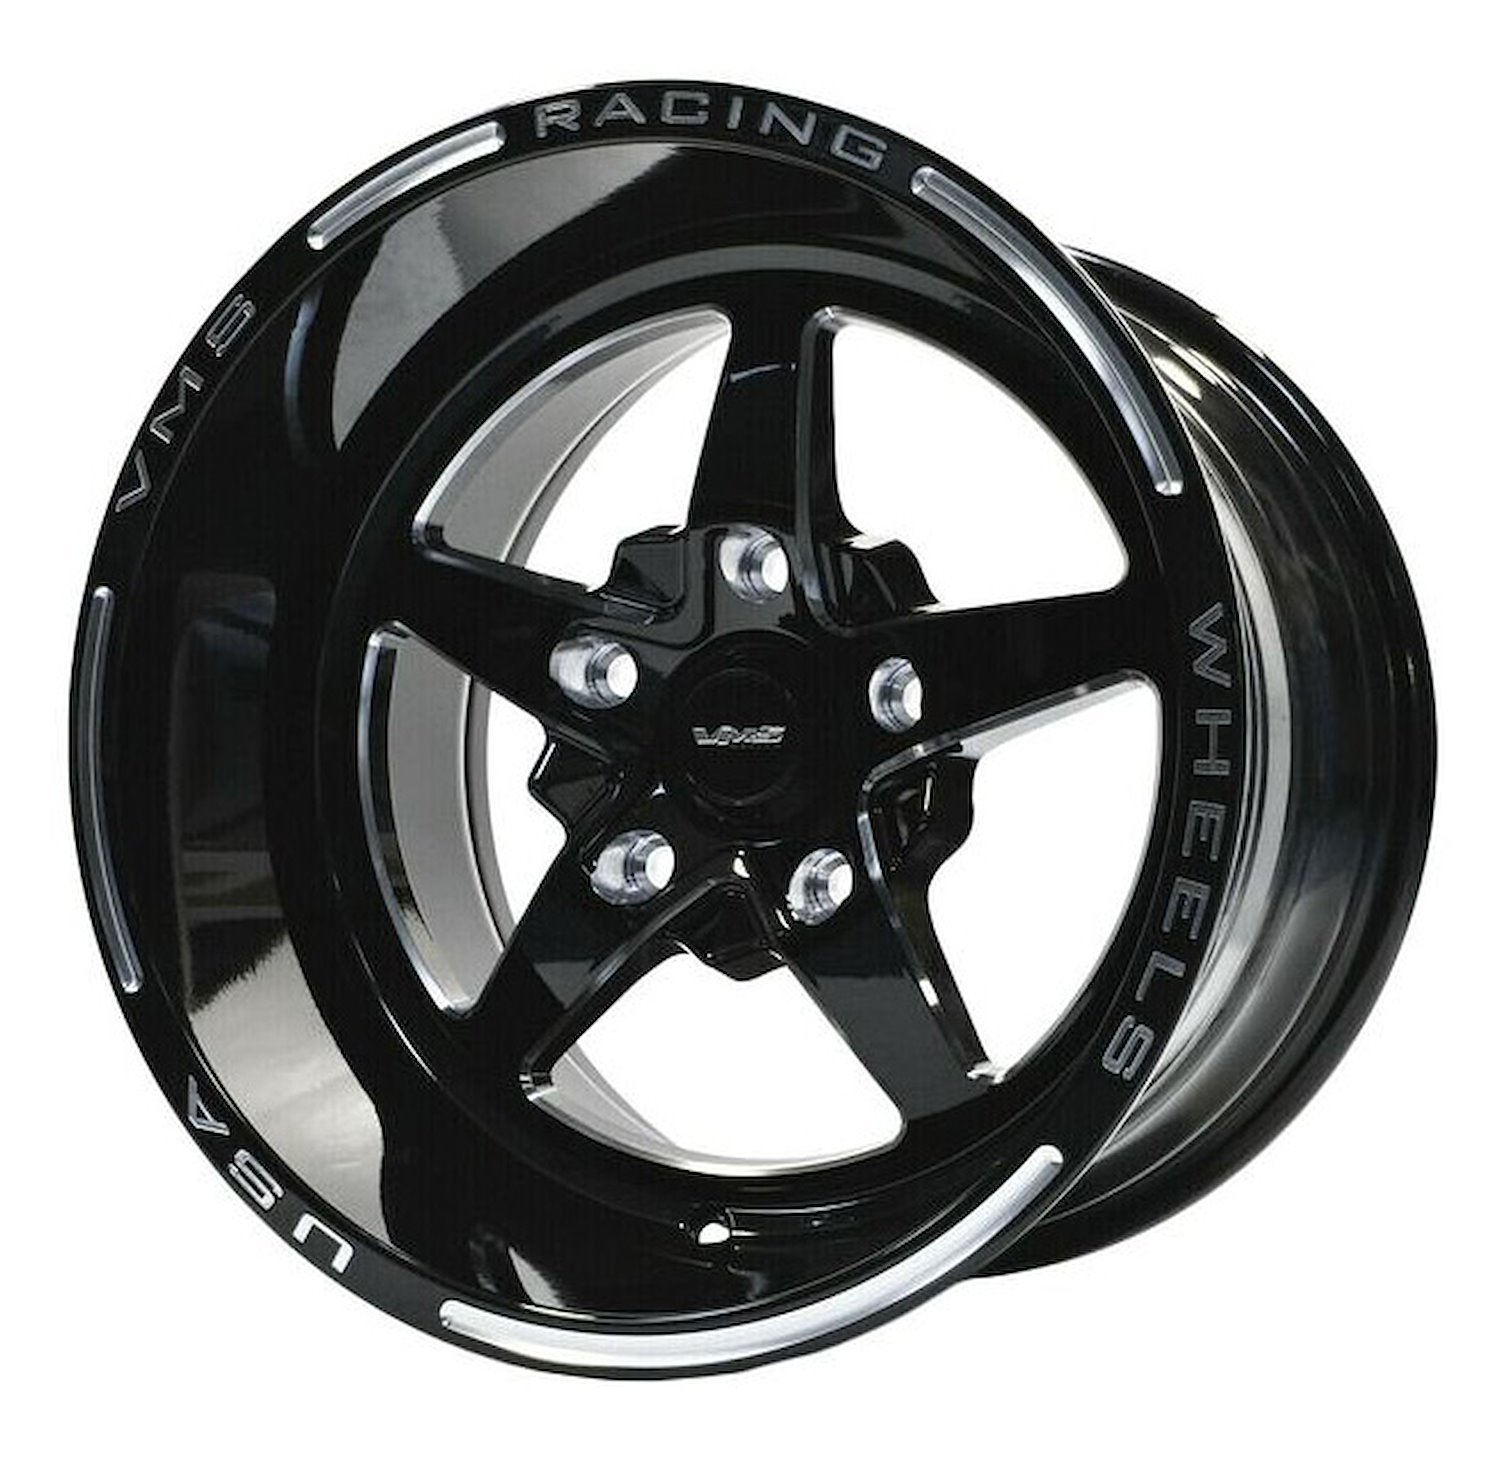 VWST060 V-Star Wheel, Size: 15" x 10", Bolt Pattern: 5 x 4 3/4" (120.65 mm) [Finish: Gloss Black Milled]